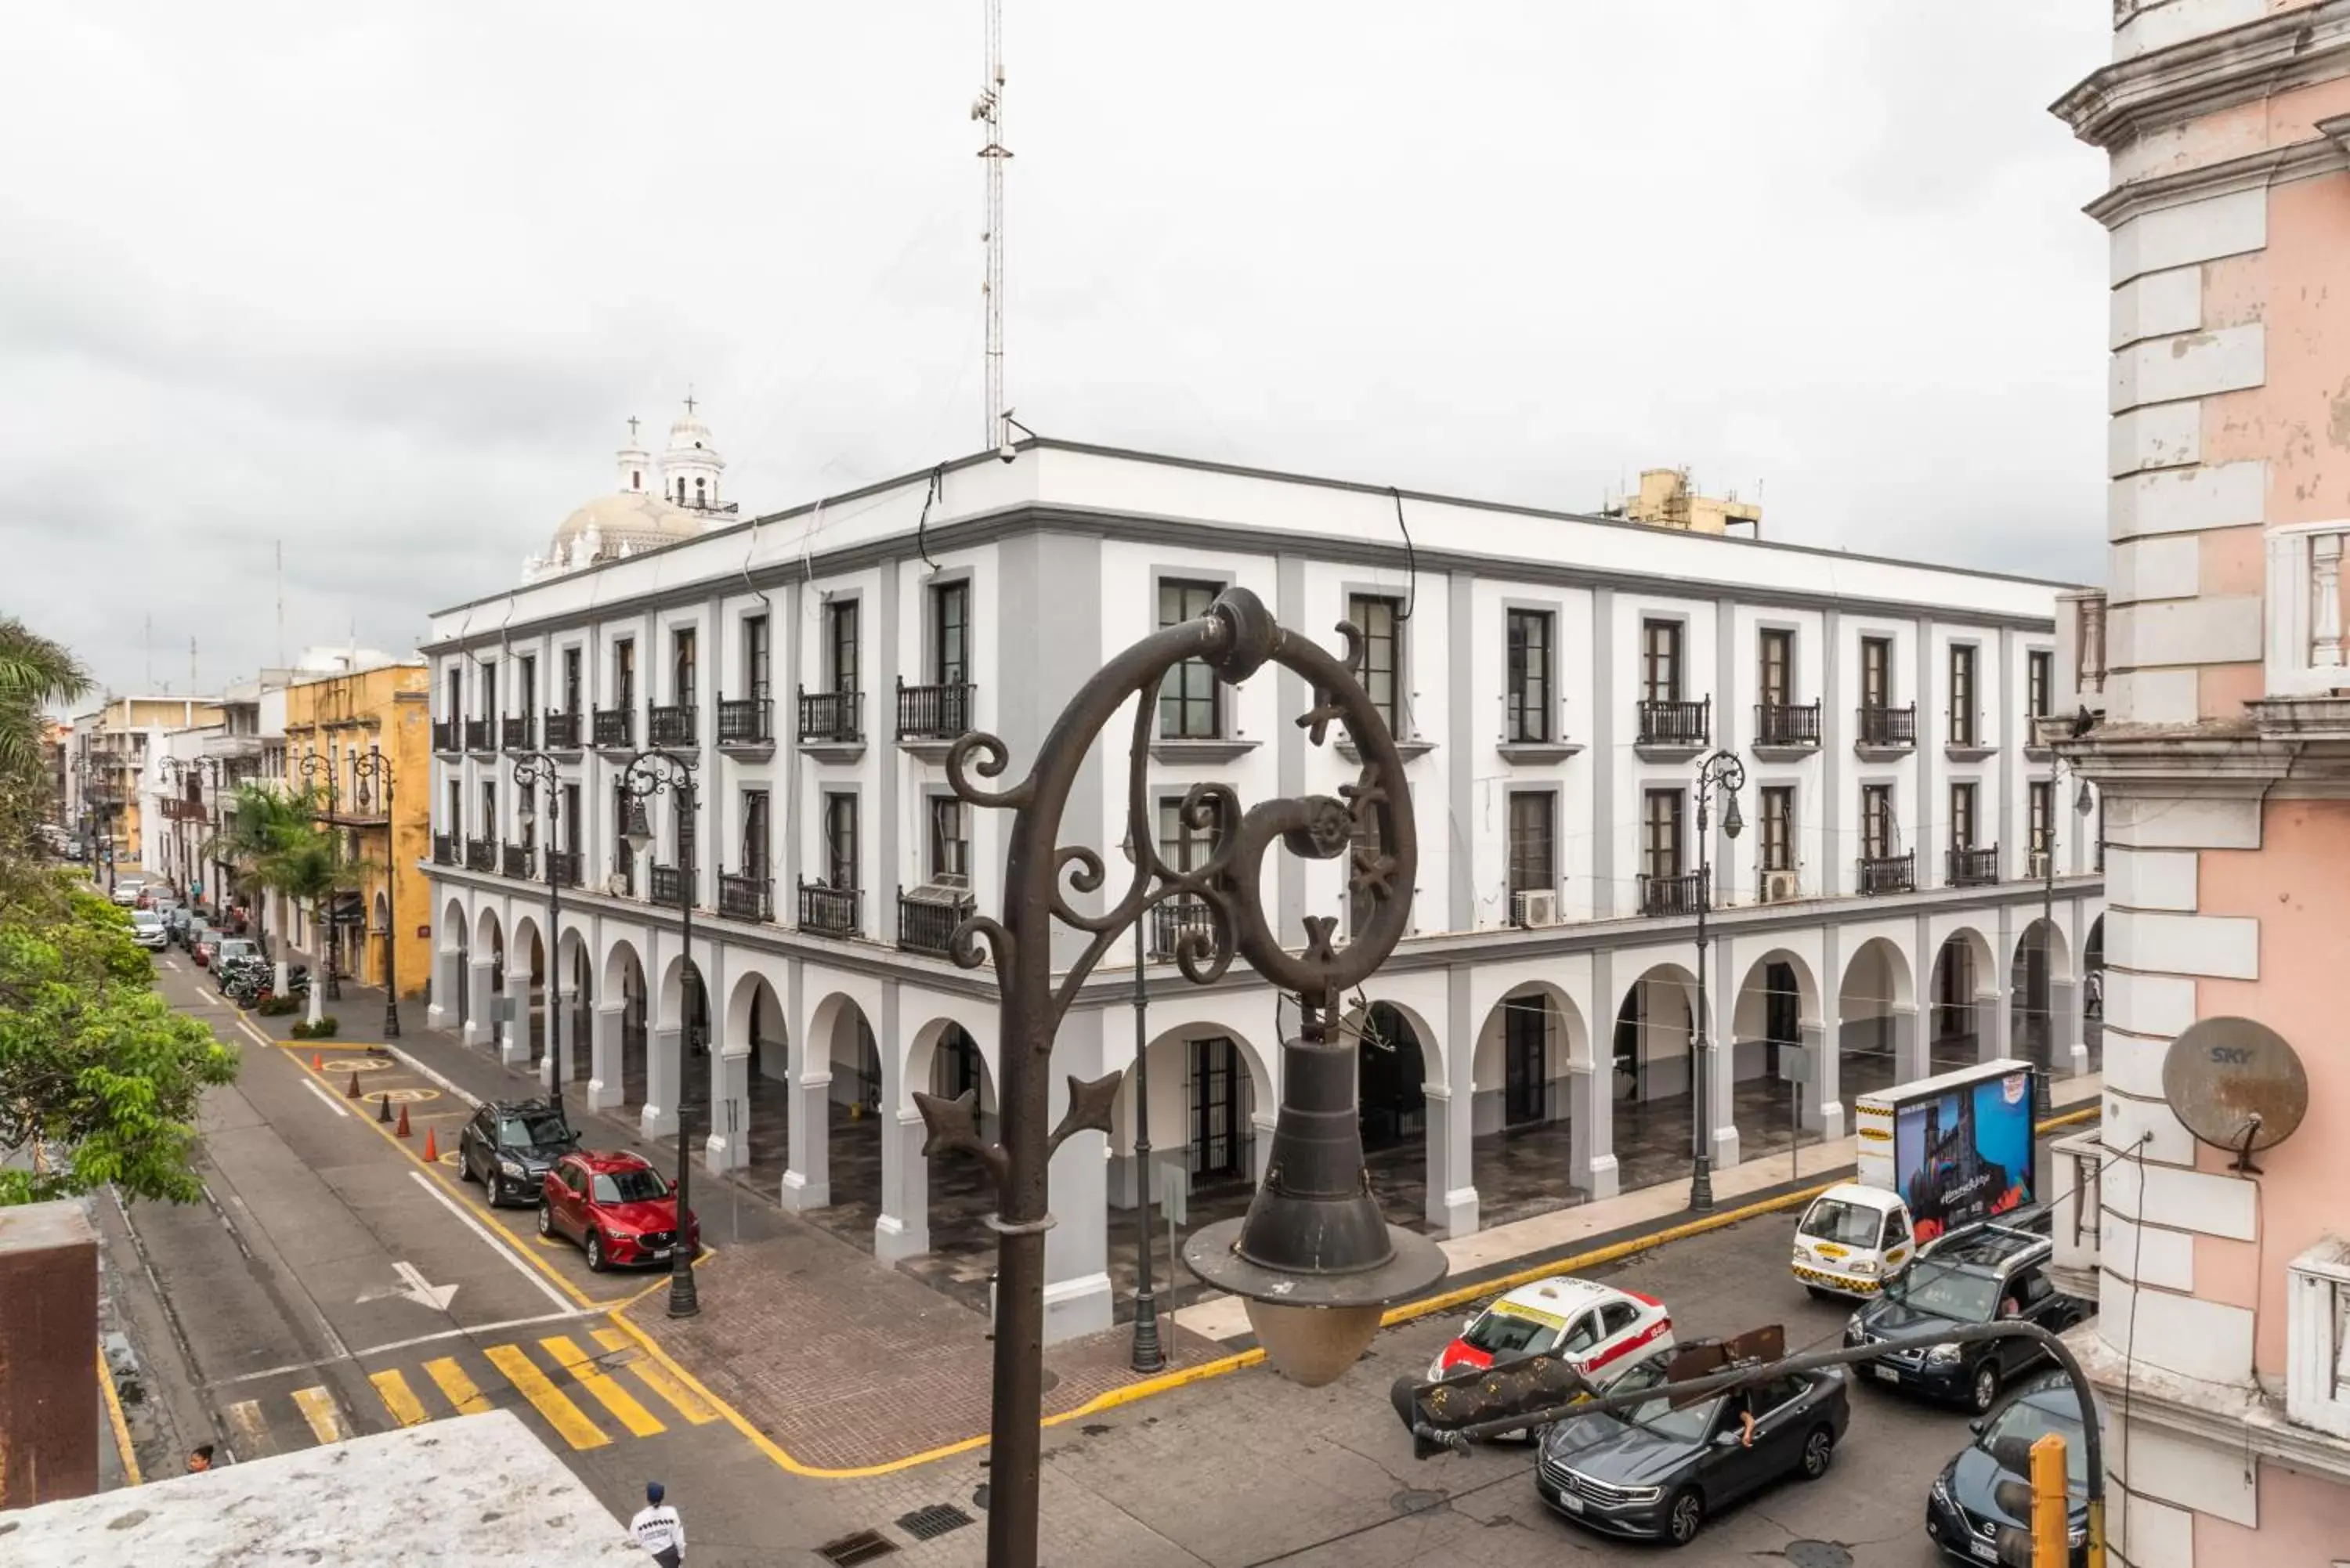 Nearby landmark in Hotel Santander Veracruz - Malecon